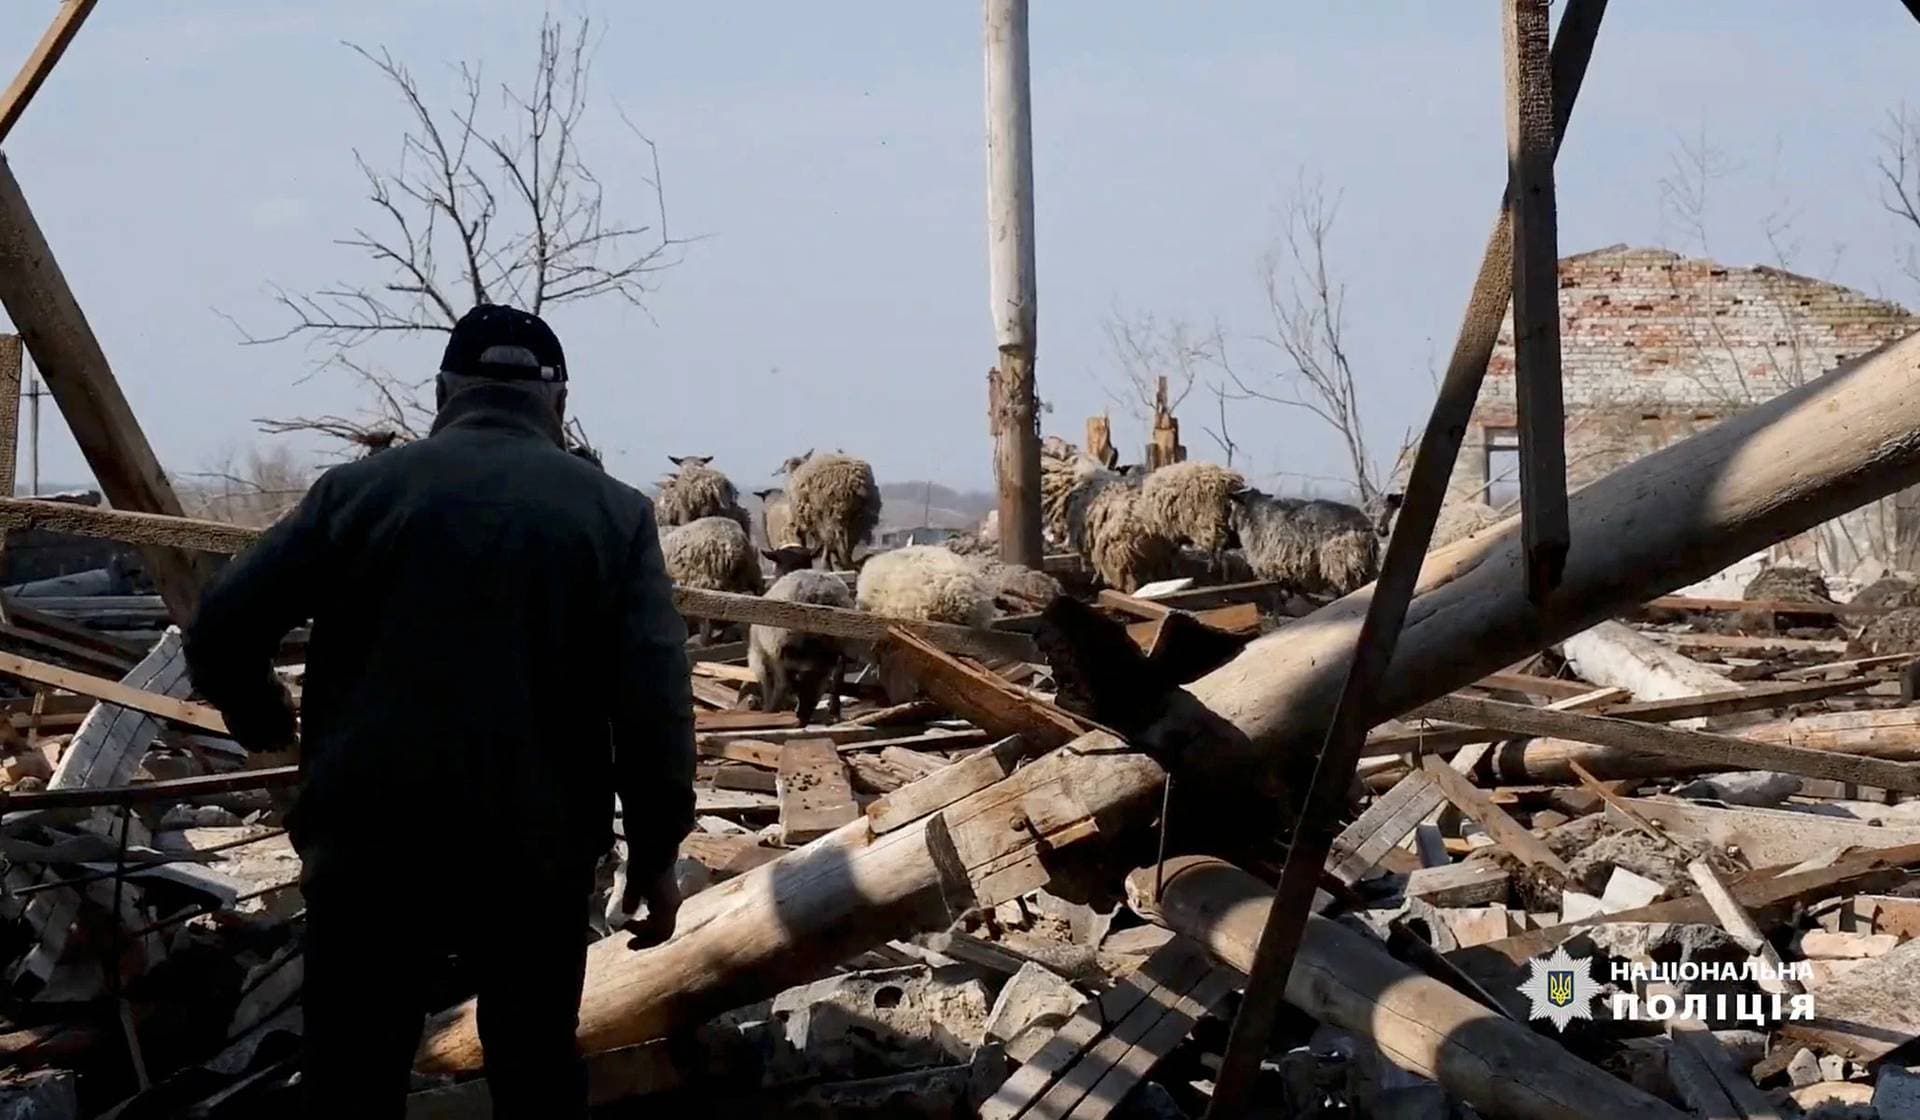 A man walks near sheep amid rubble in Avdiivka